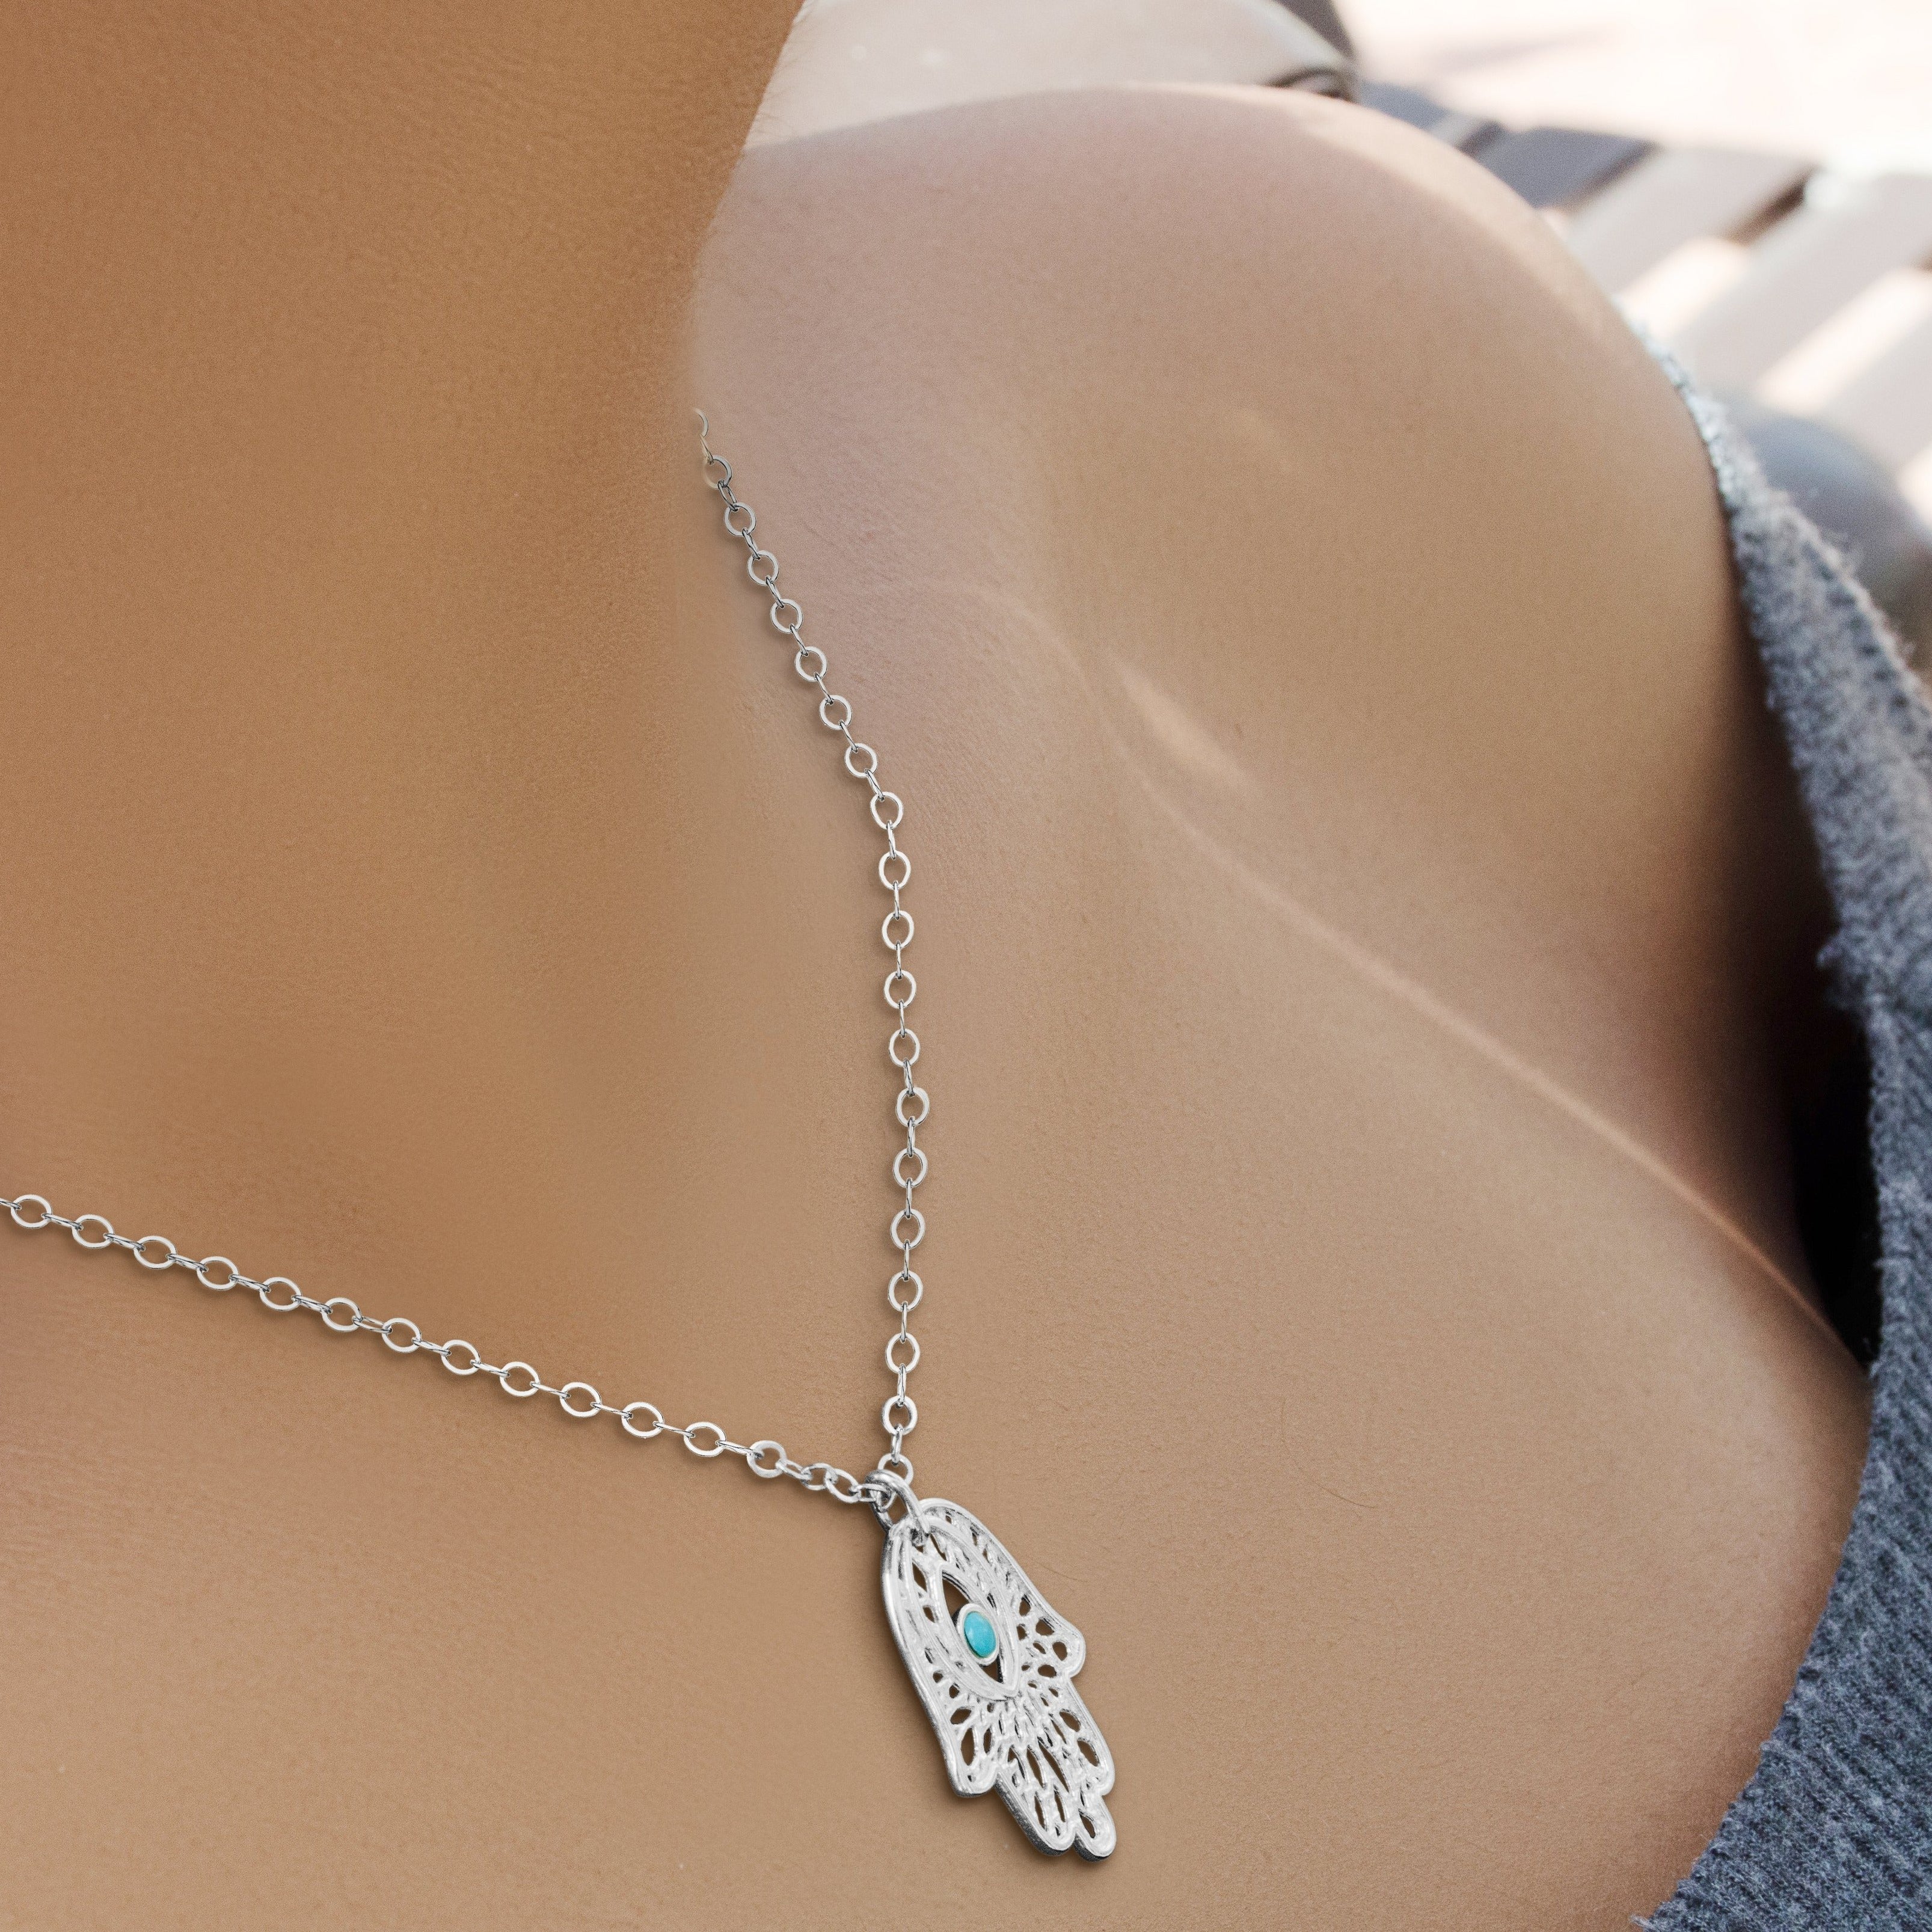 Filigree Hamsa Necklace with Lucky Turquoise Gemstone - Alef Bet Jewelry by Paula